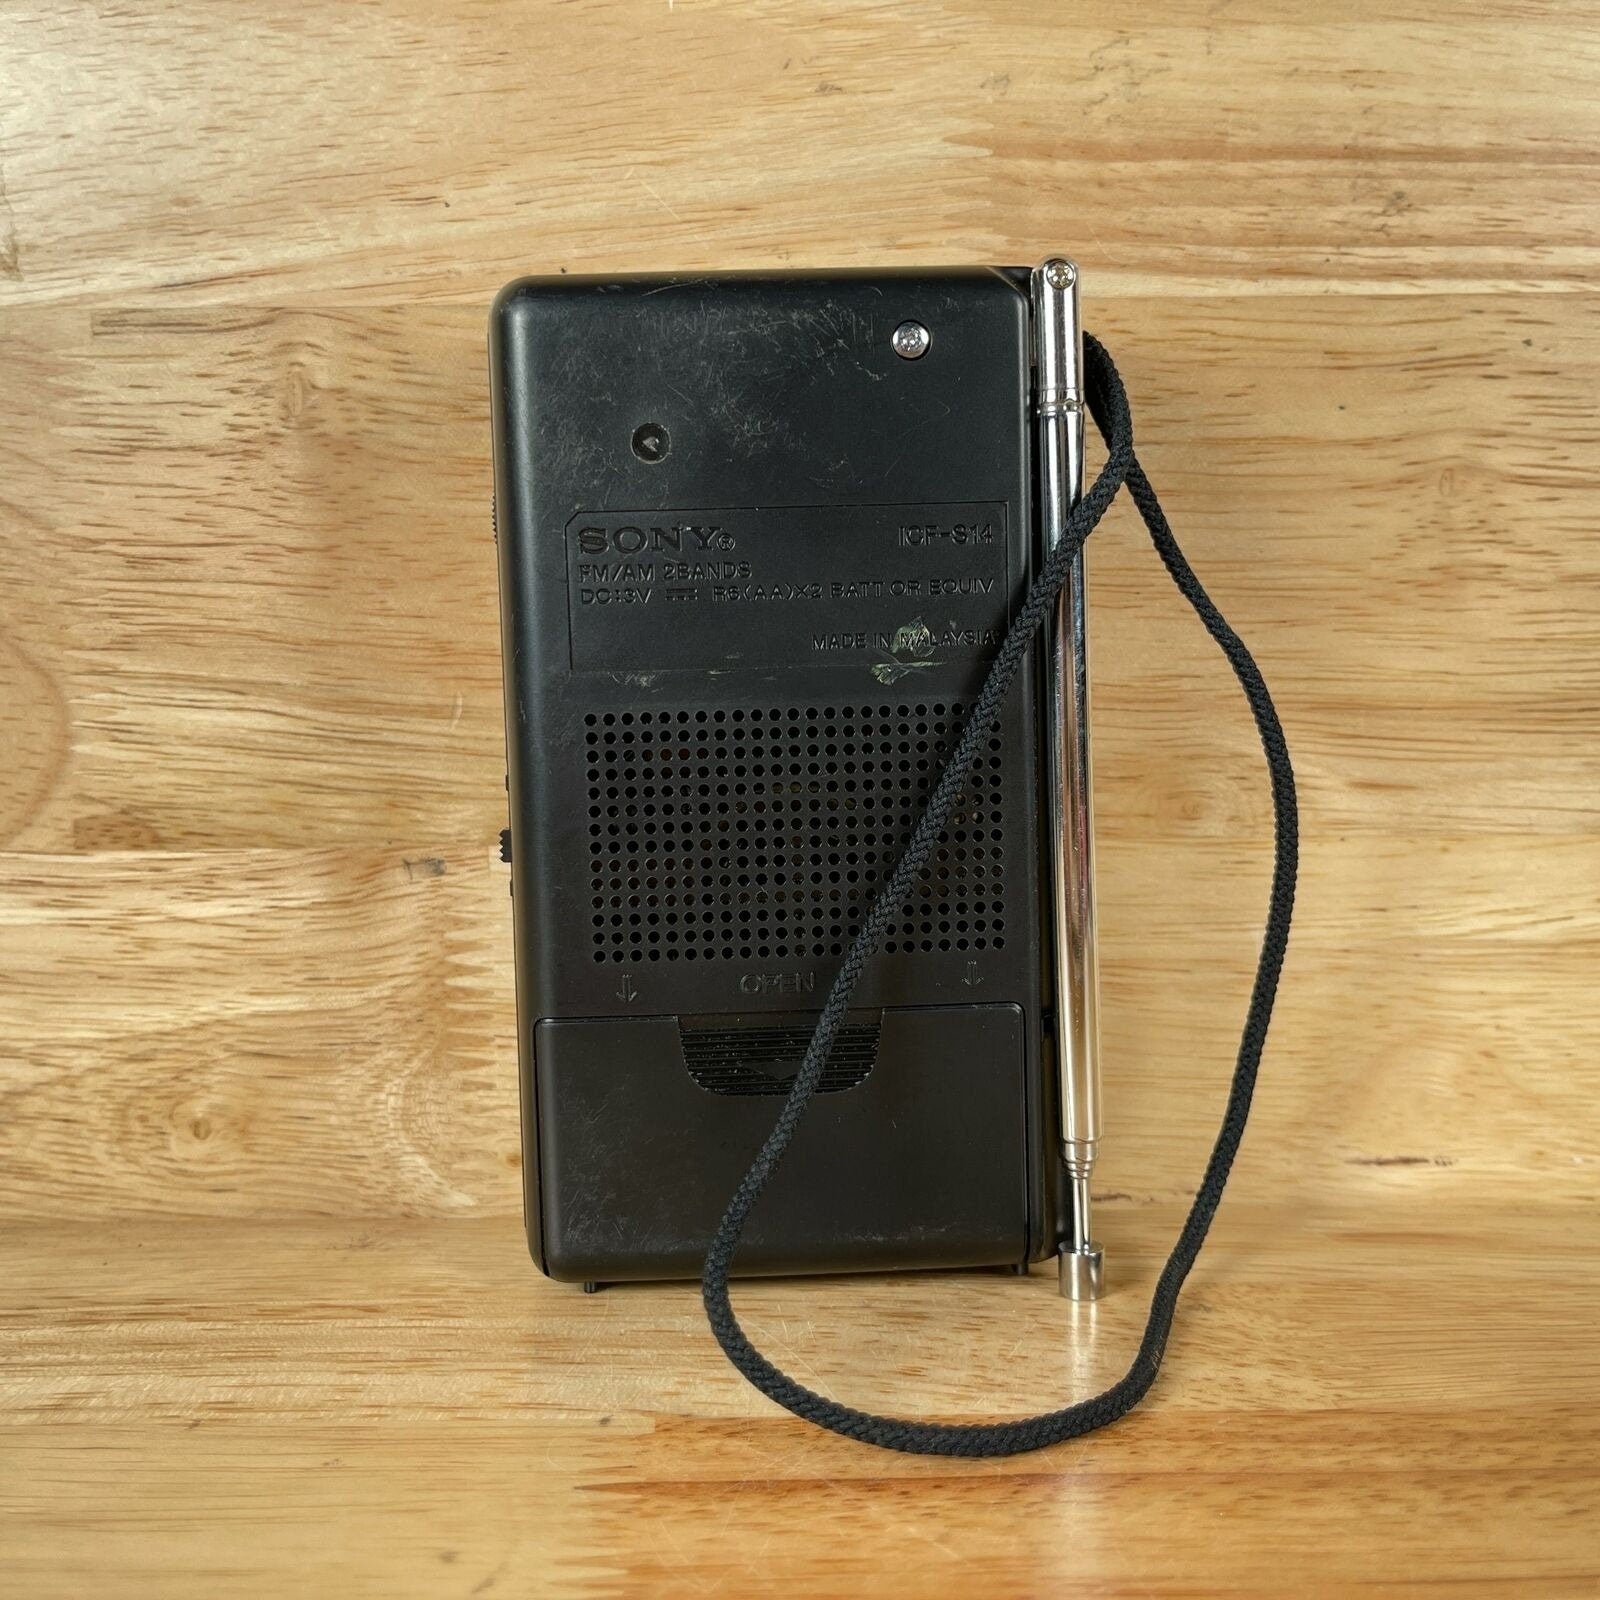 Sony ICF-S14 Black AM/FM 2 Band Receiver 108 MHz Handy Portable Radio